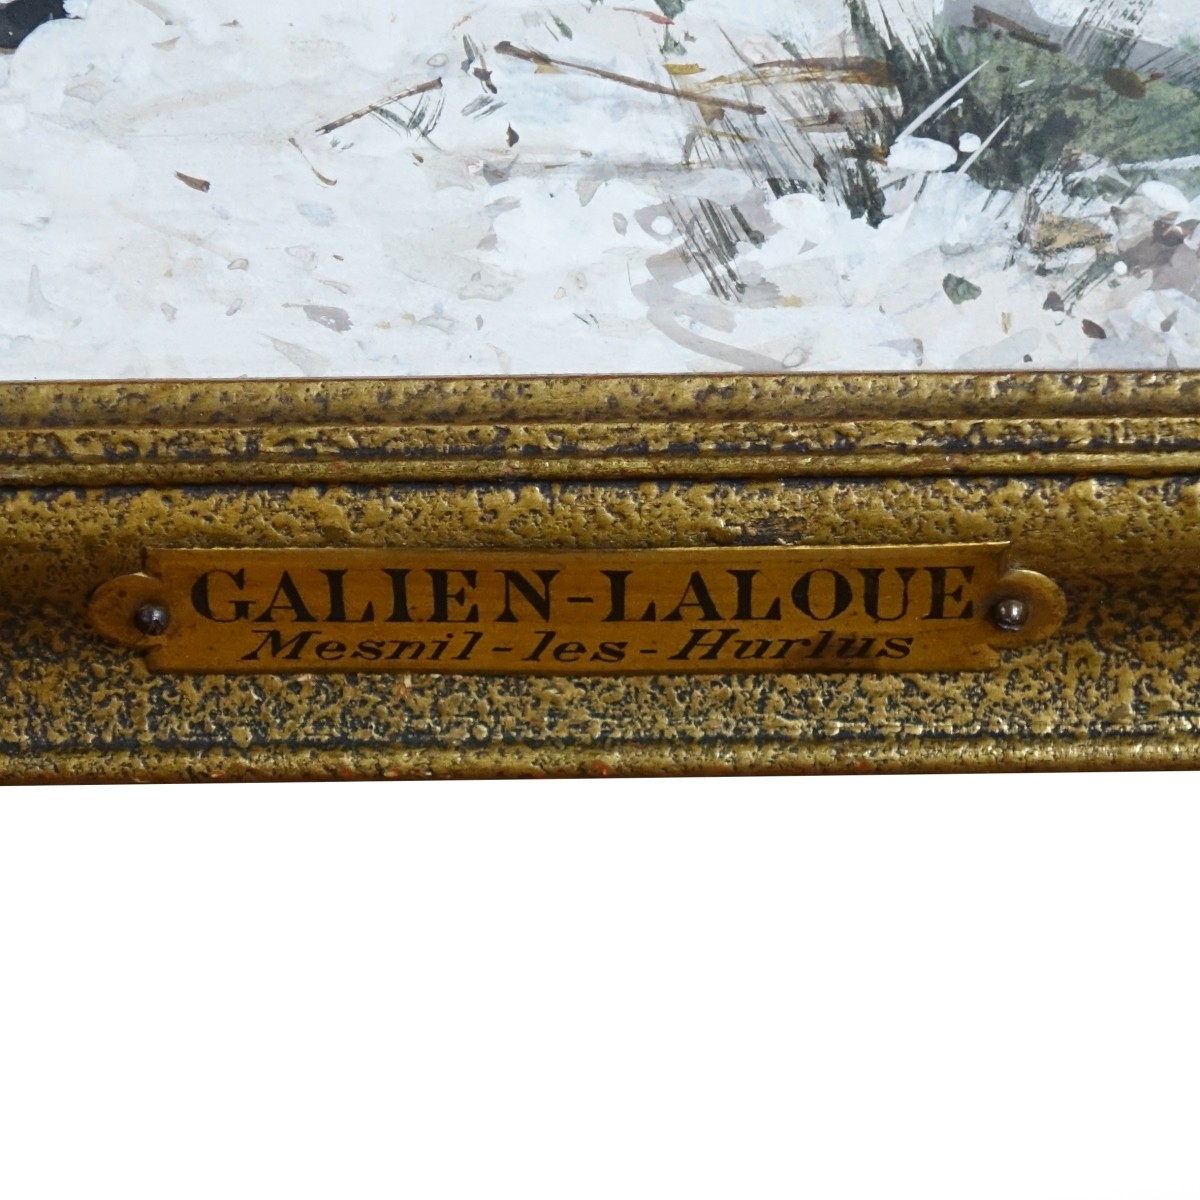 Eugene Galien-Laloue, French (1854 - 1941)